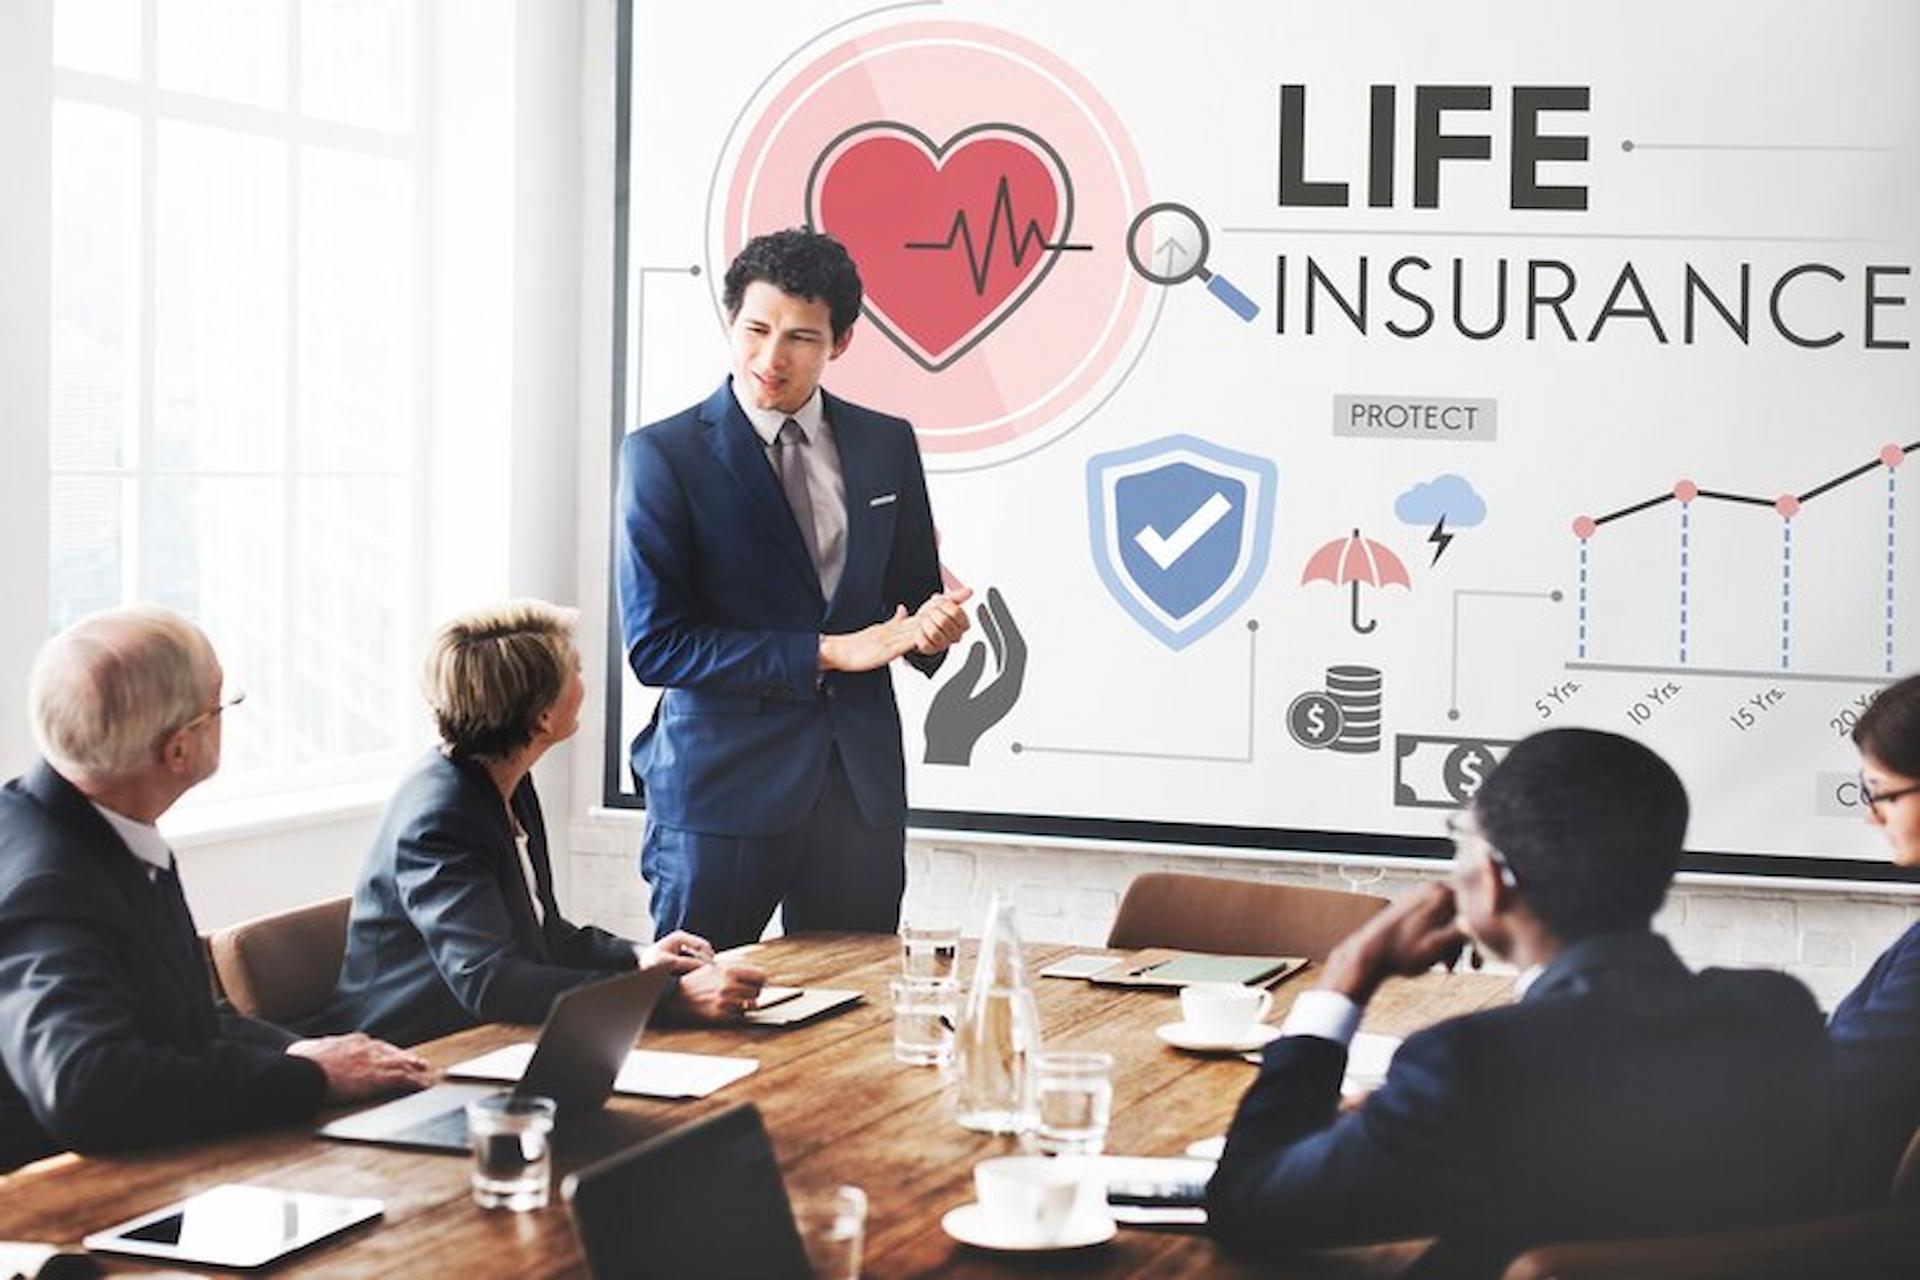 General Life Insurance